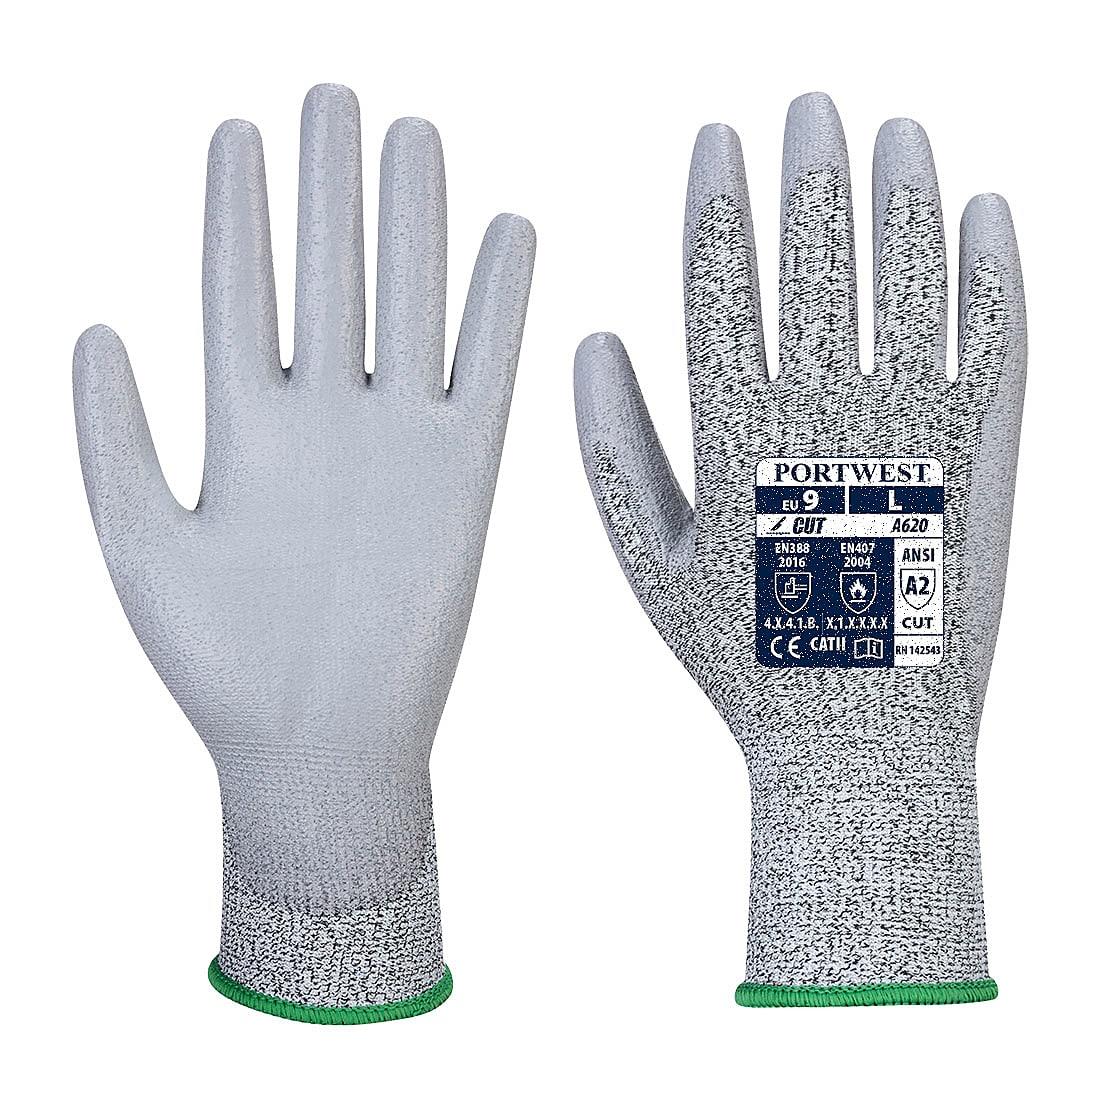 Portwest LR Cut PU Palm Gloves in Grey (Product Code: A620)